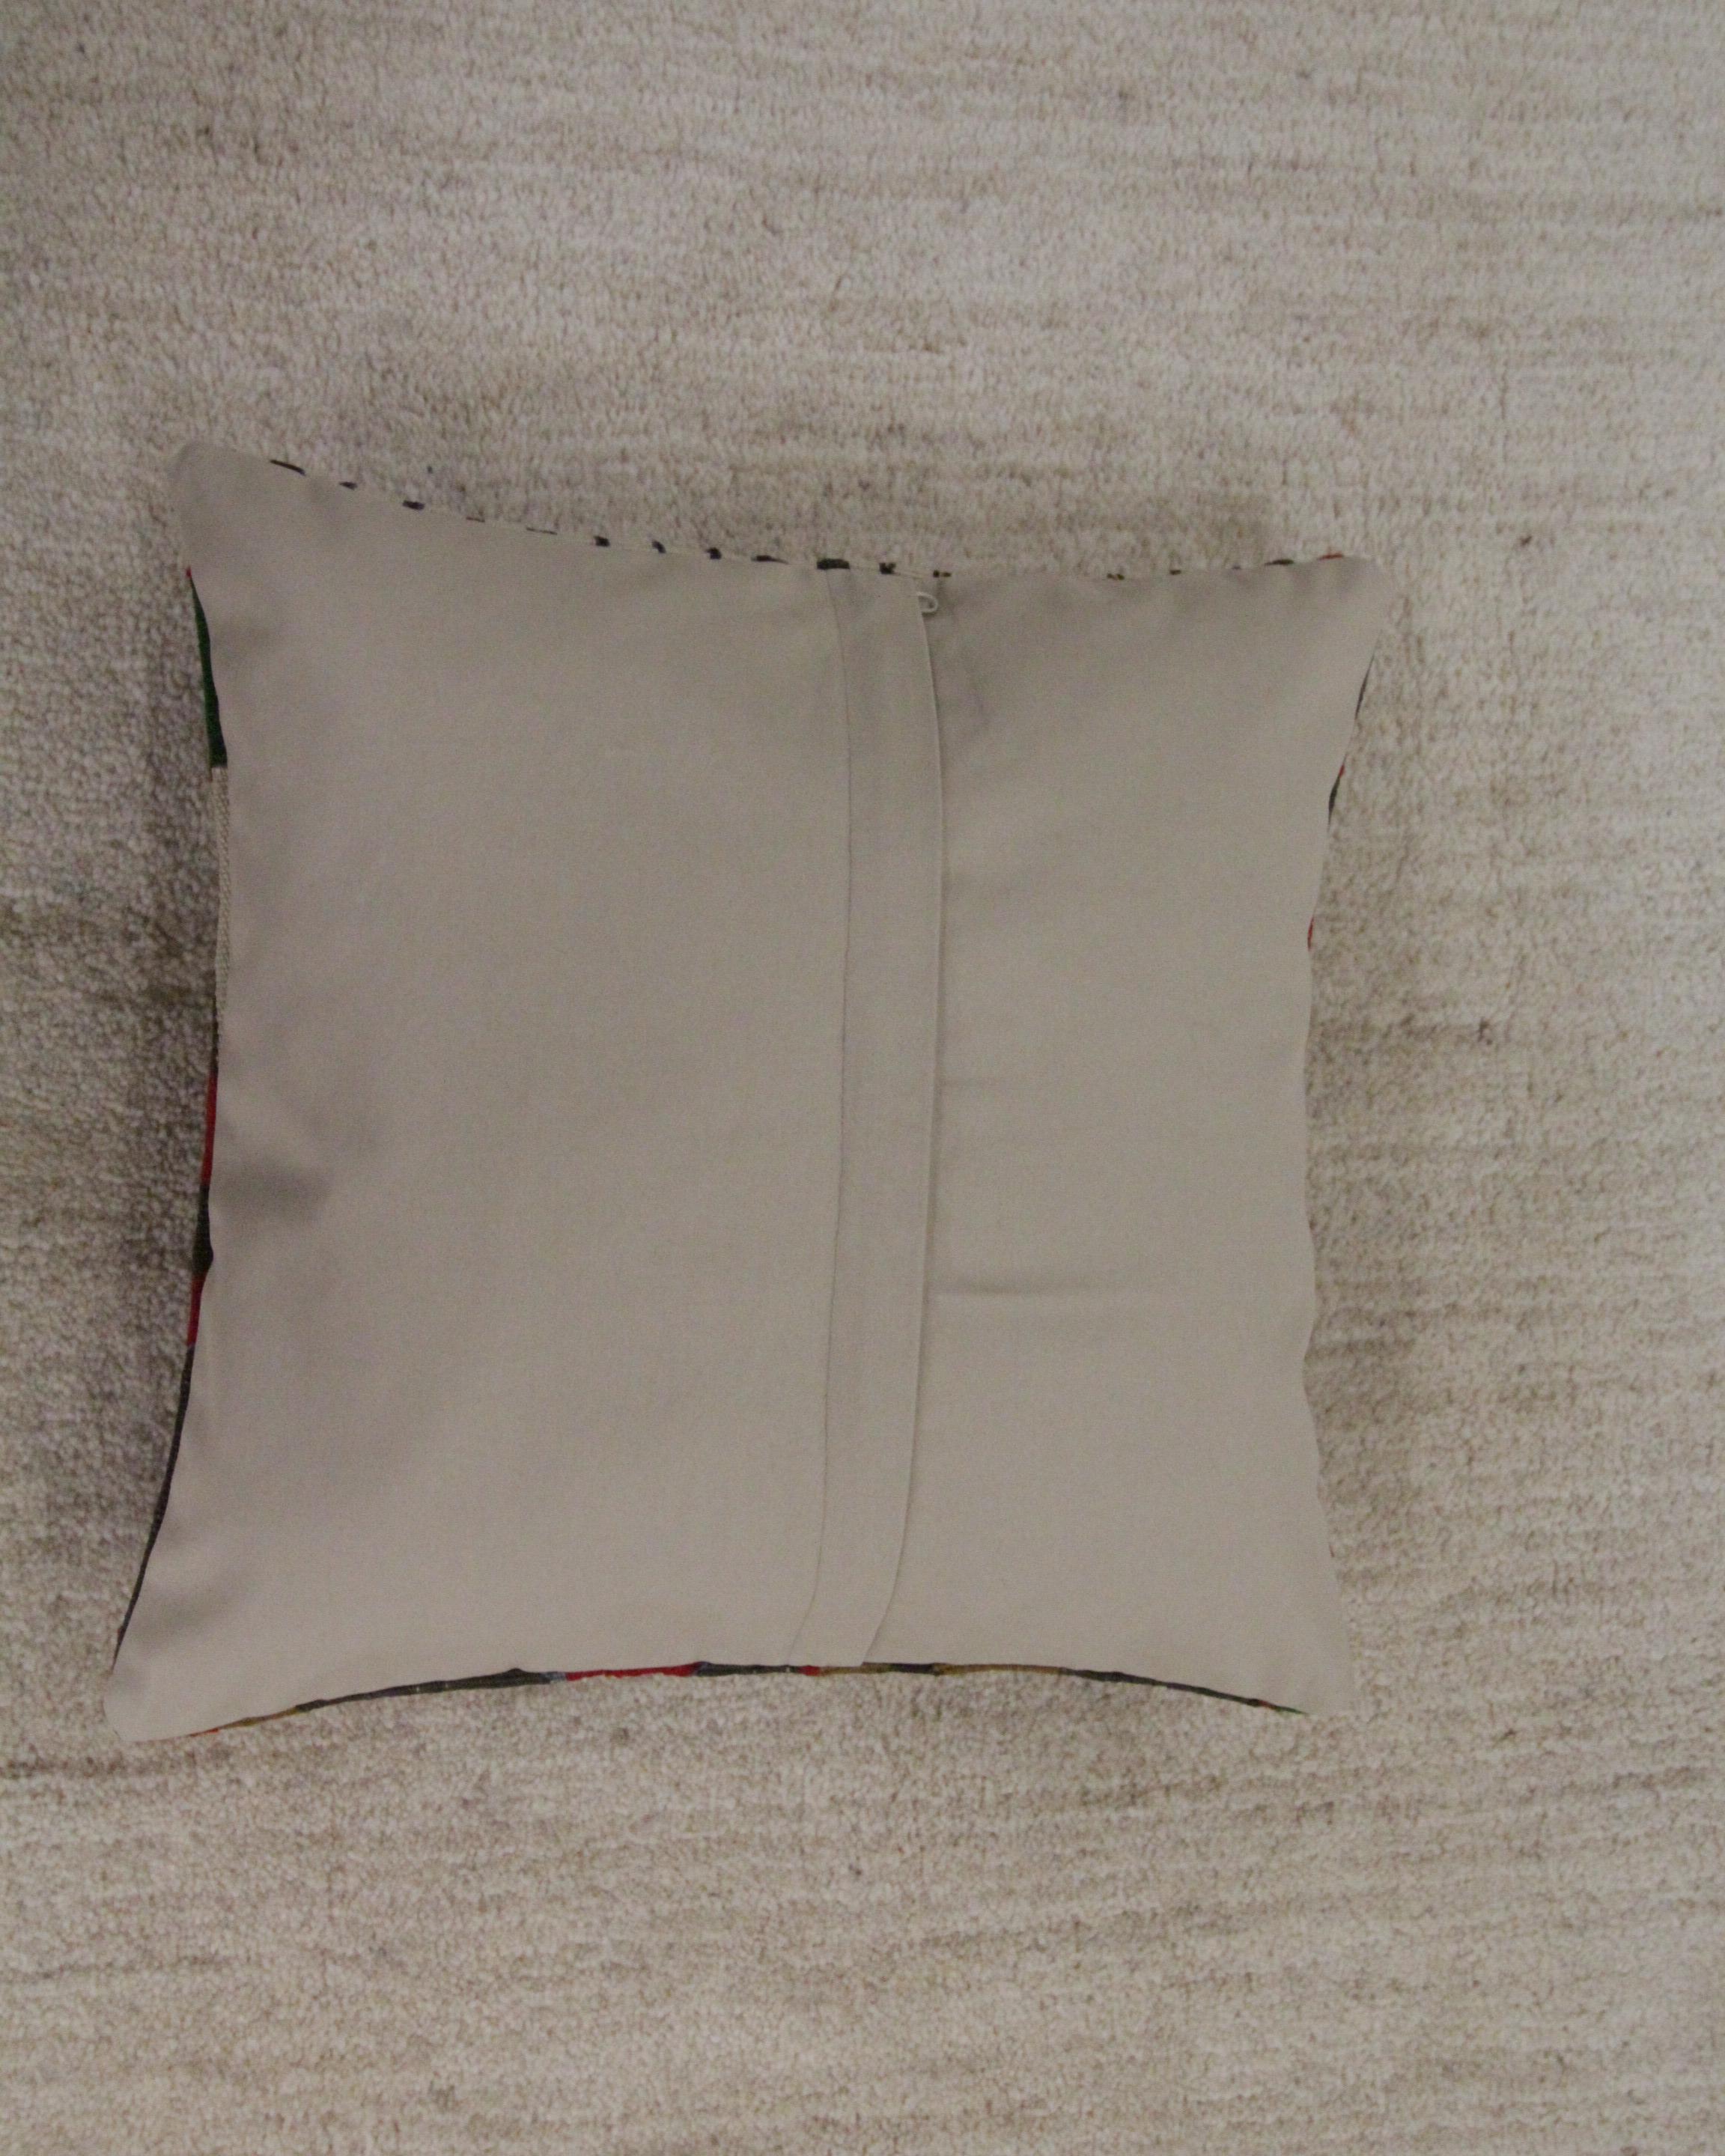 Tribal Turkish Rug Kilim Cushion Cover, Traditional Handmade Pillow Cover